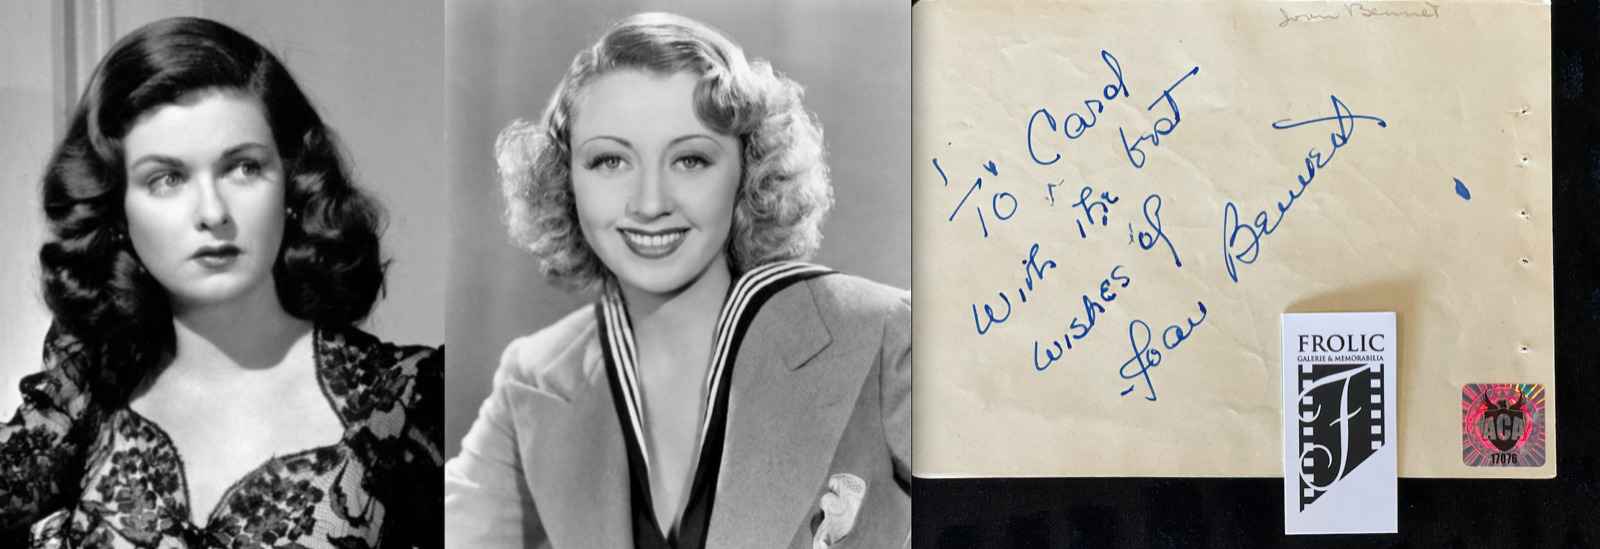 JOAN BLONDELL & JOAN BENNET 1930's Signed Autographs Album Page ACA (LOA) *STARS